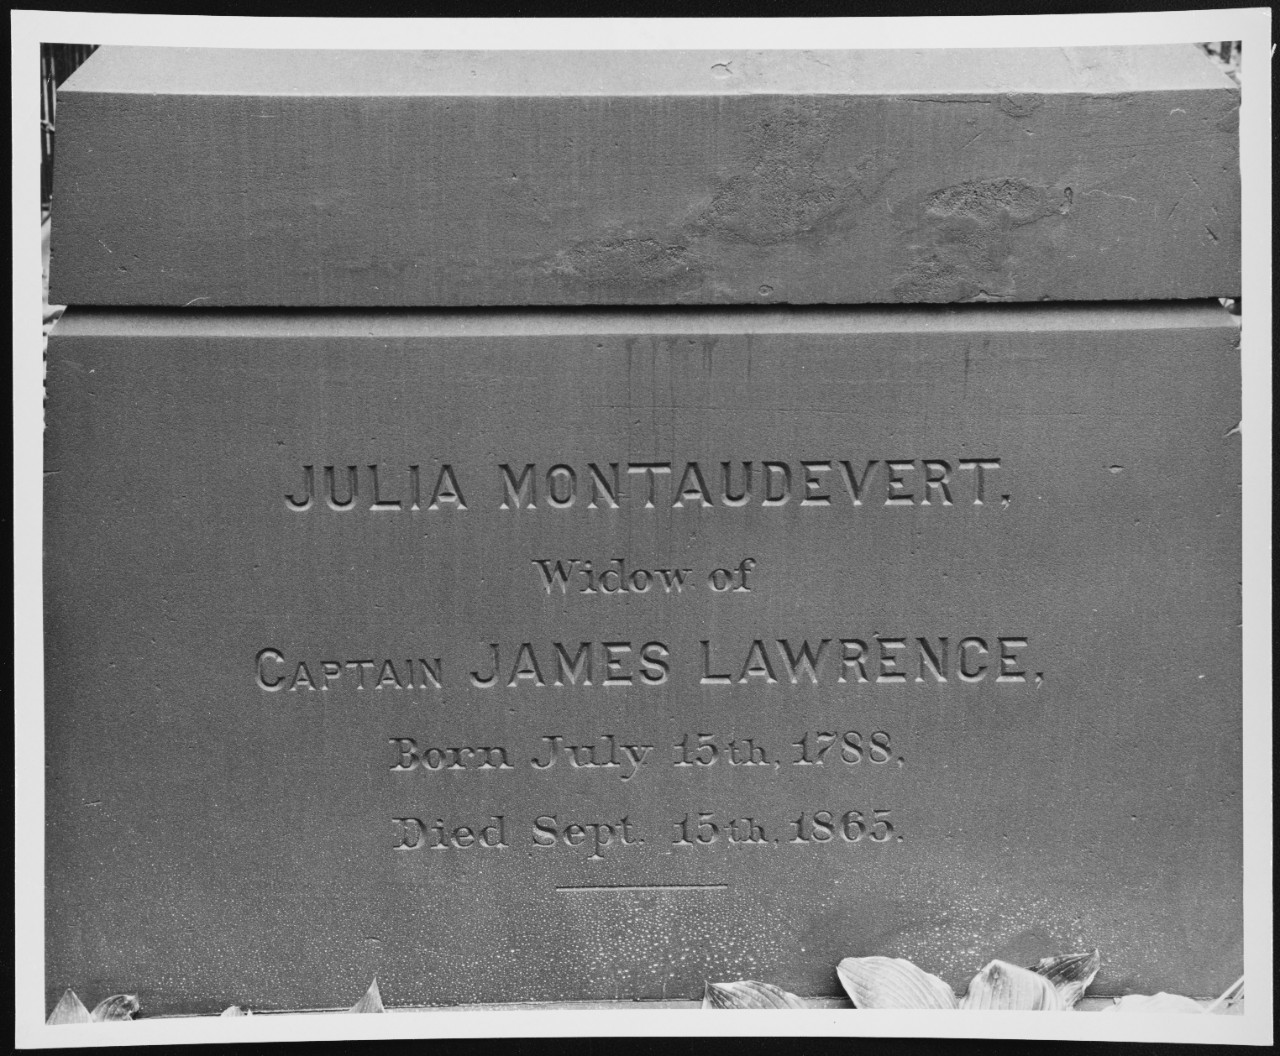 Grave stone of Julia Montaudevert, Widow of Captain James Lawrence, USN